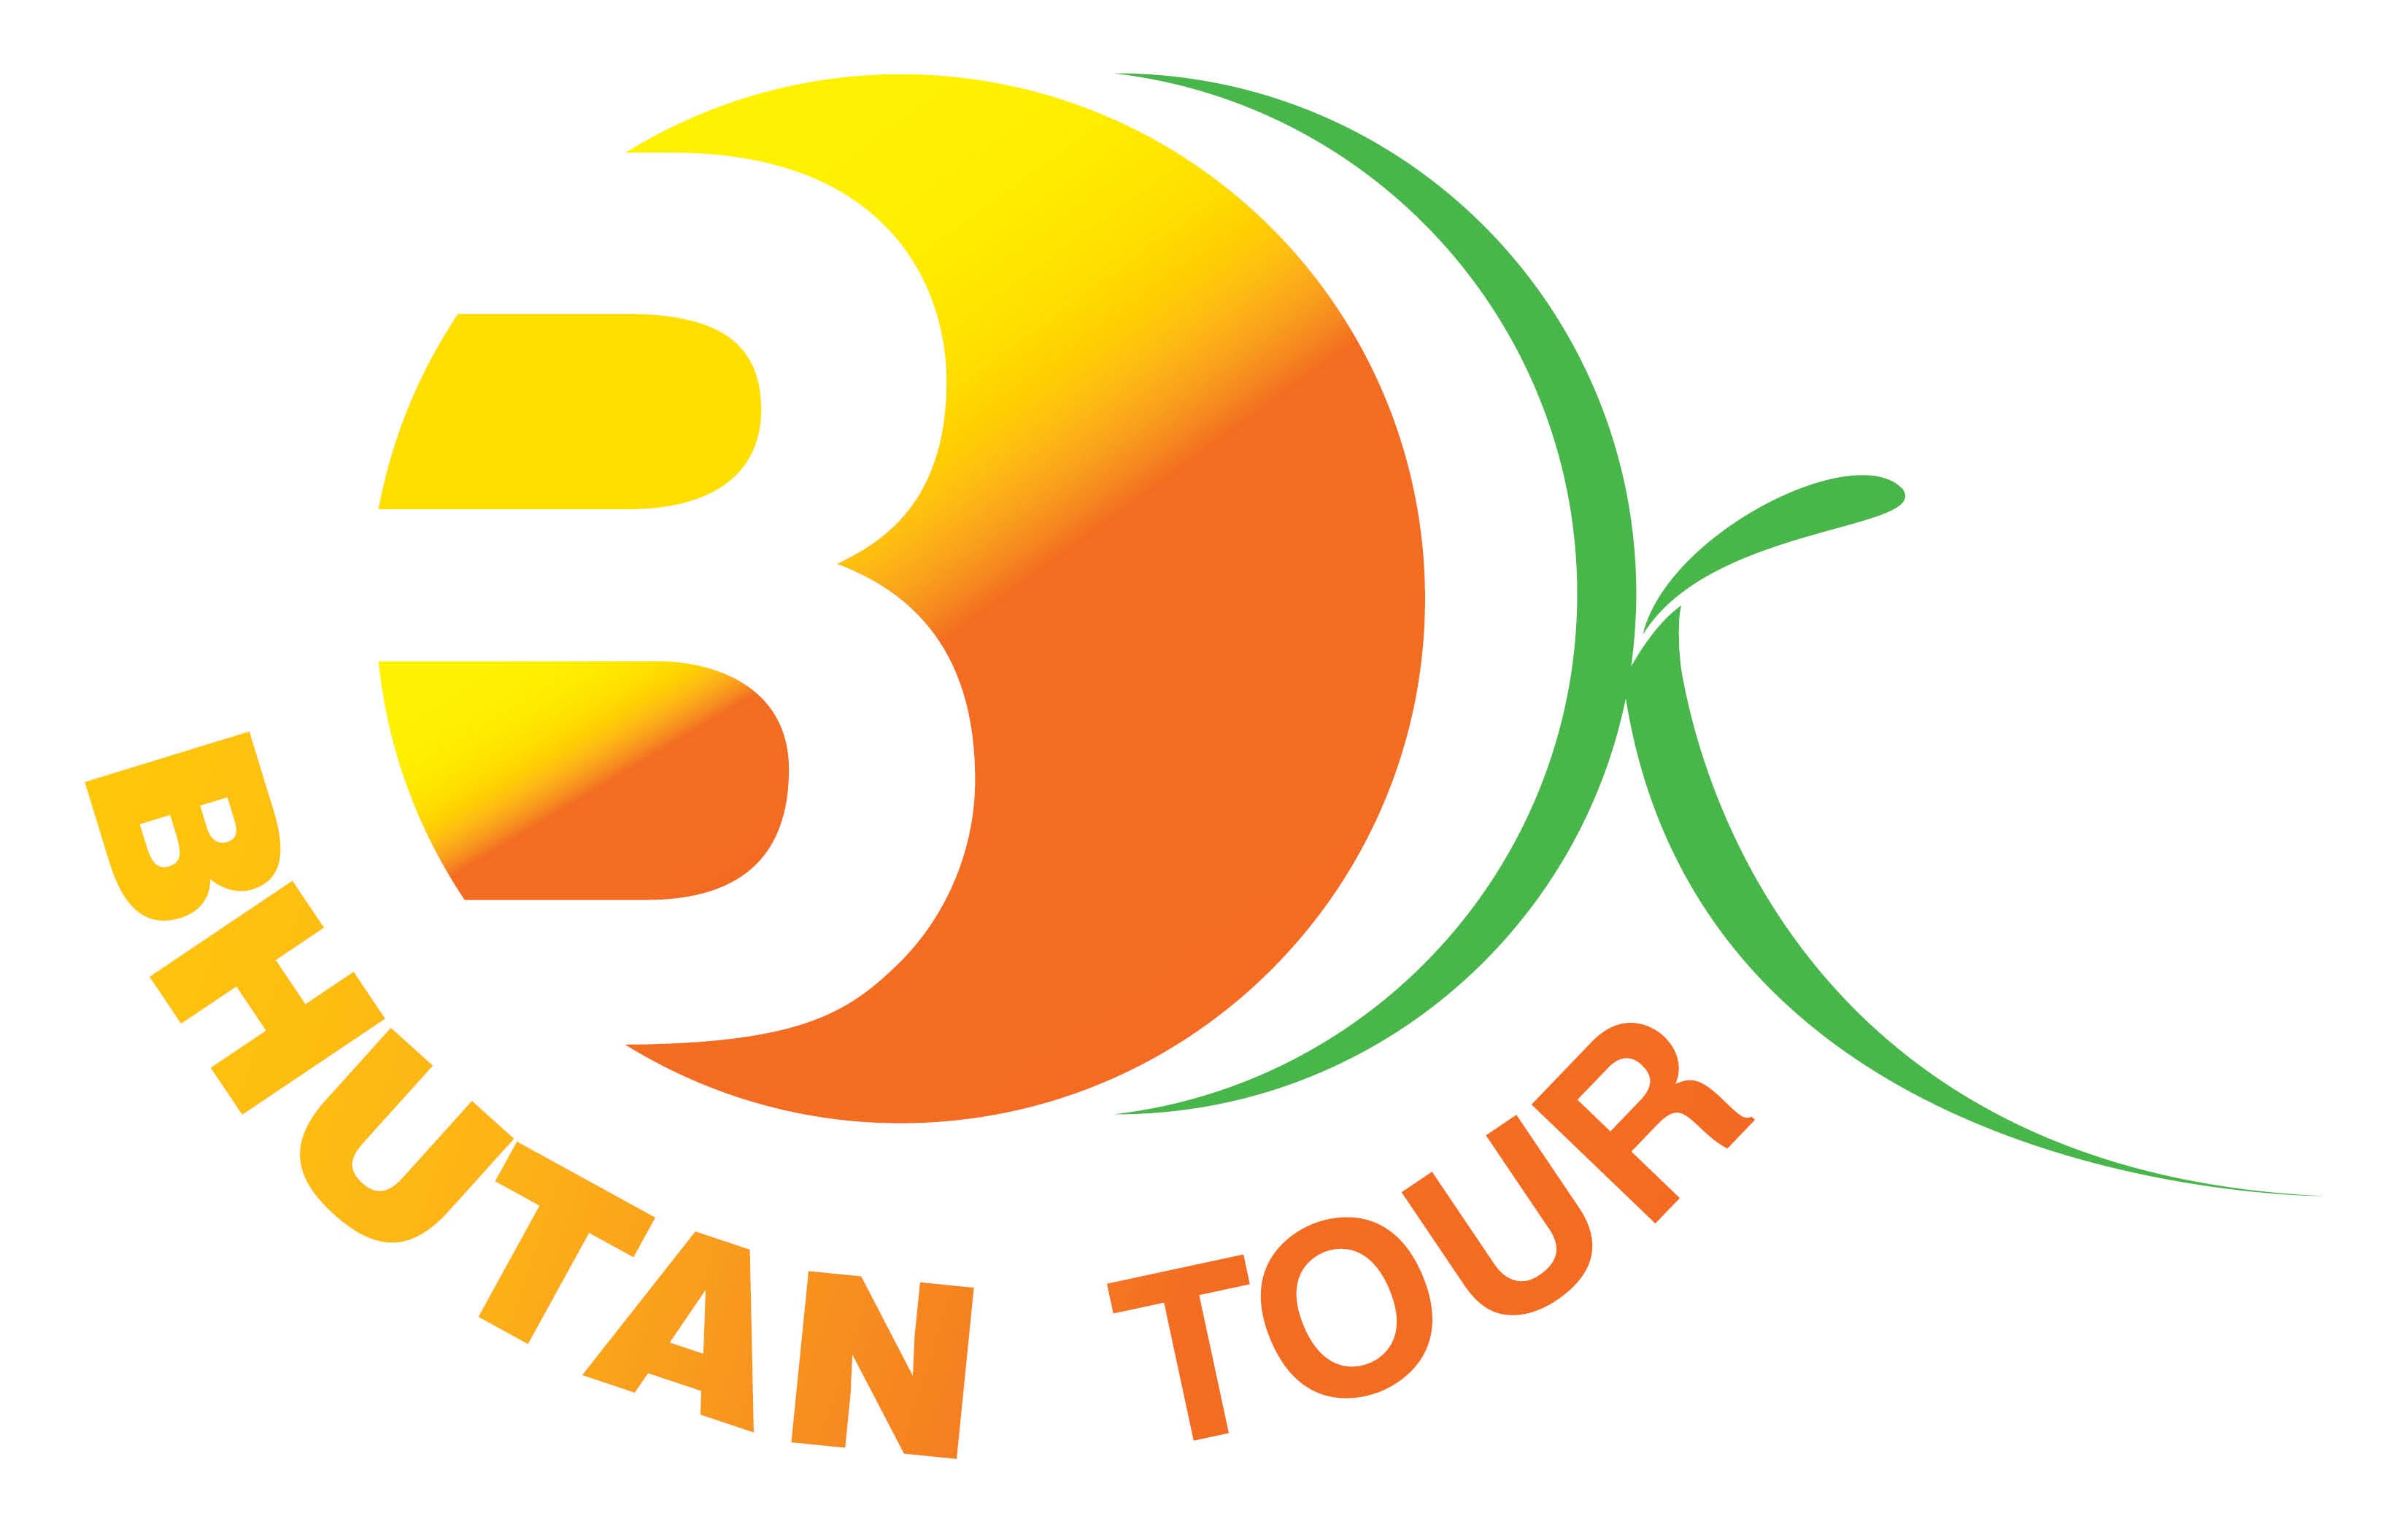 Book bhutan tour logo